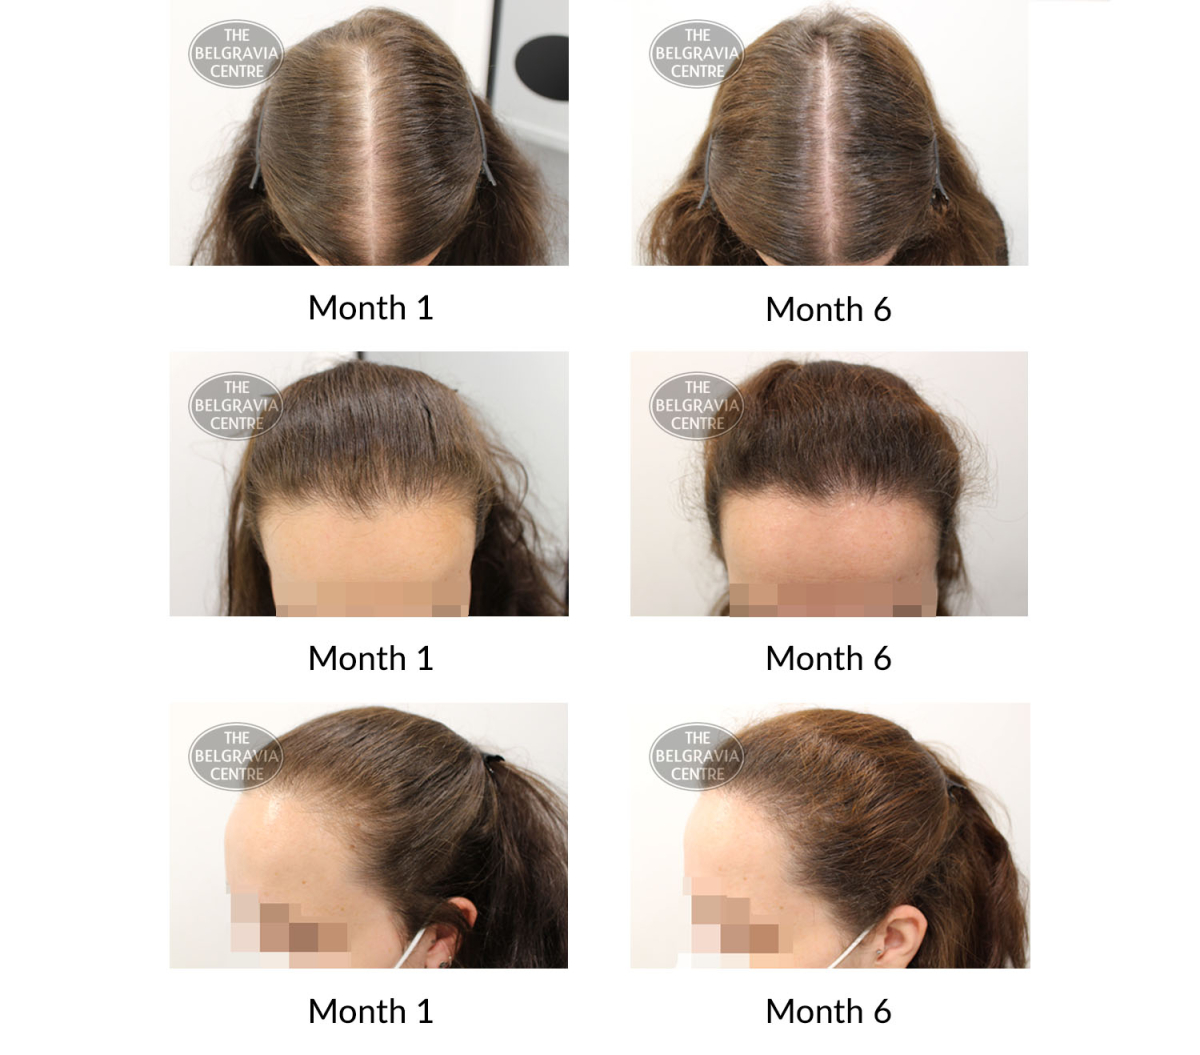 female pattern hair loss the belgravia centre 423776 25 11 21